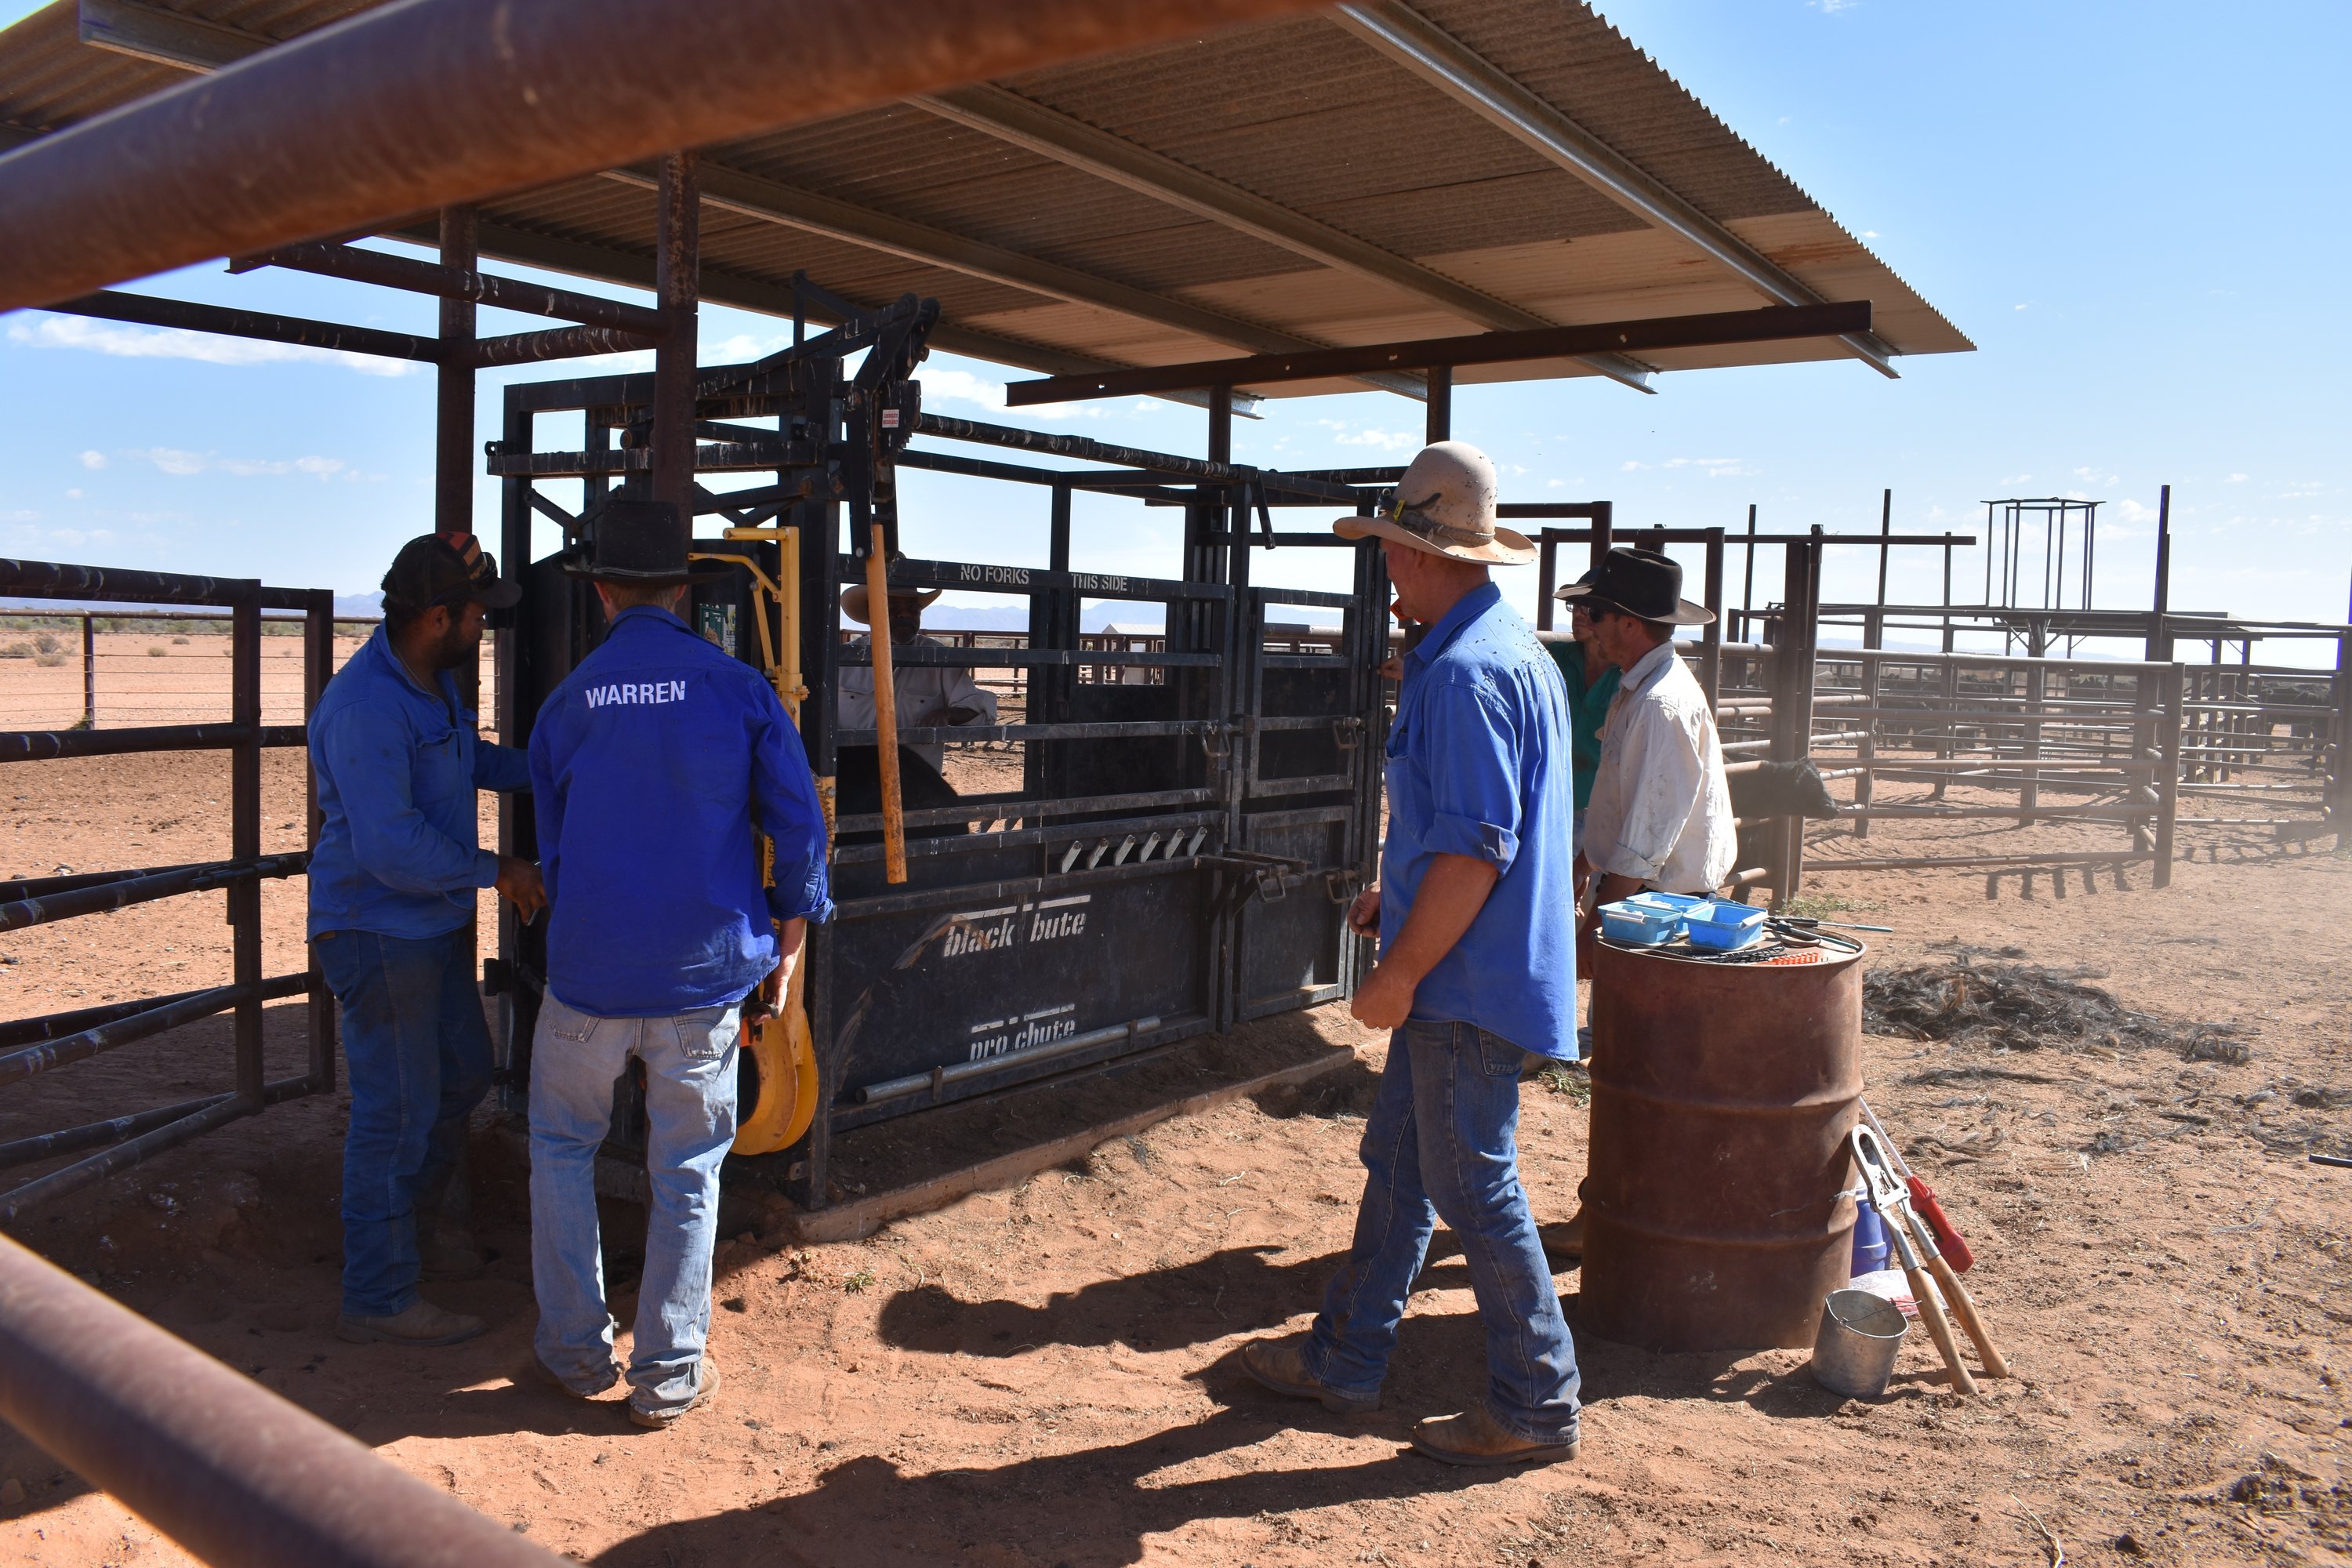 Cattle mustering australia jobs